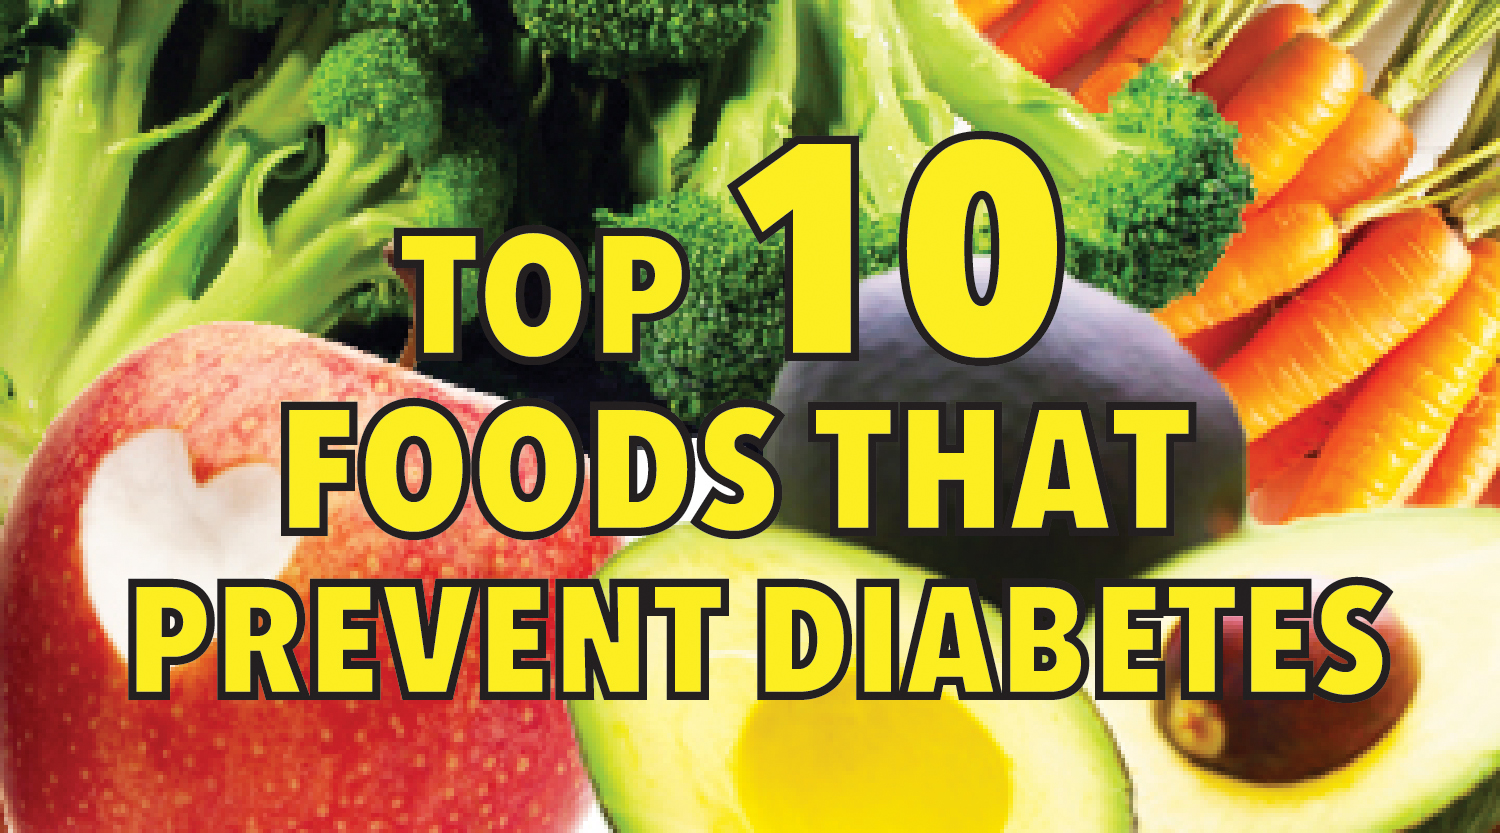 Top 10 foods that prevent diabetes